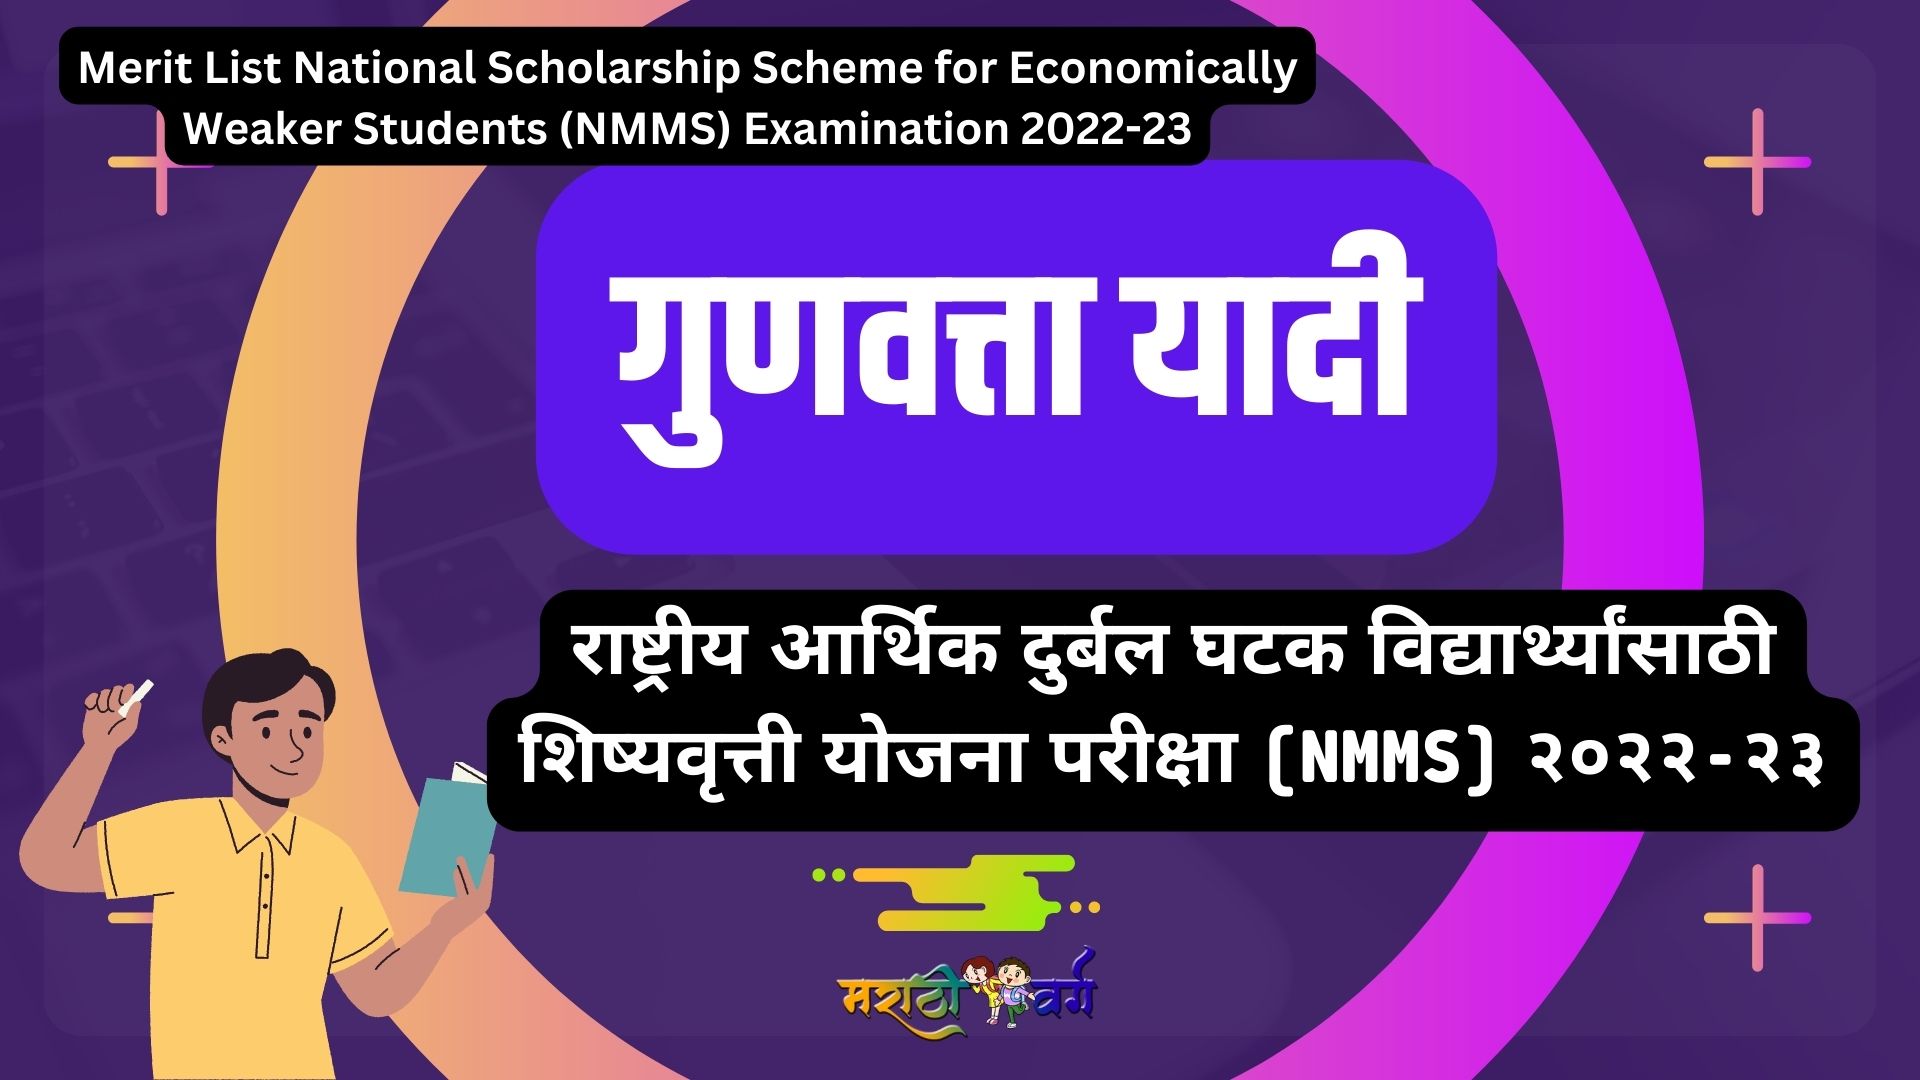 Merit List National Scholarship Scheme for Economically Weaker Students (NMMS) Examination 2022-23